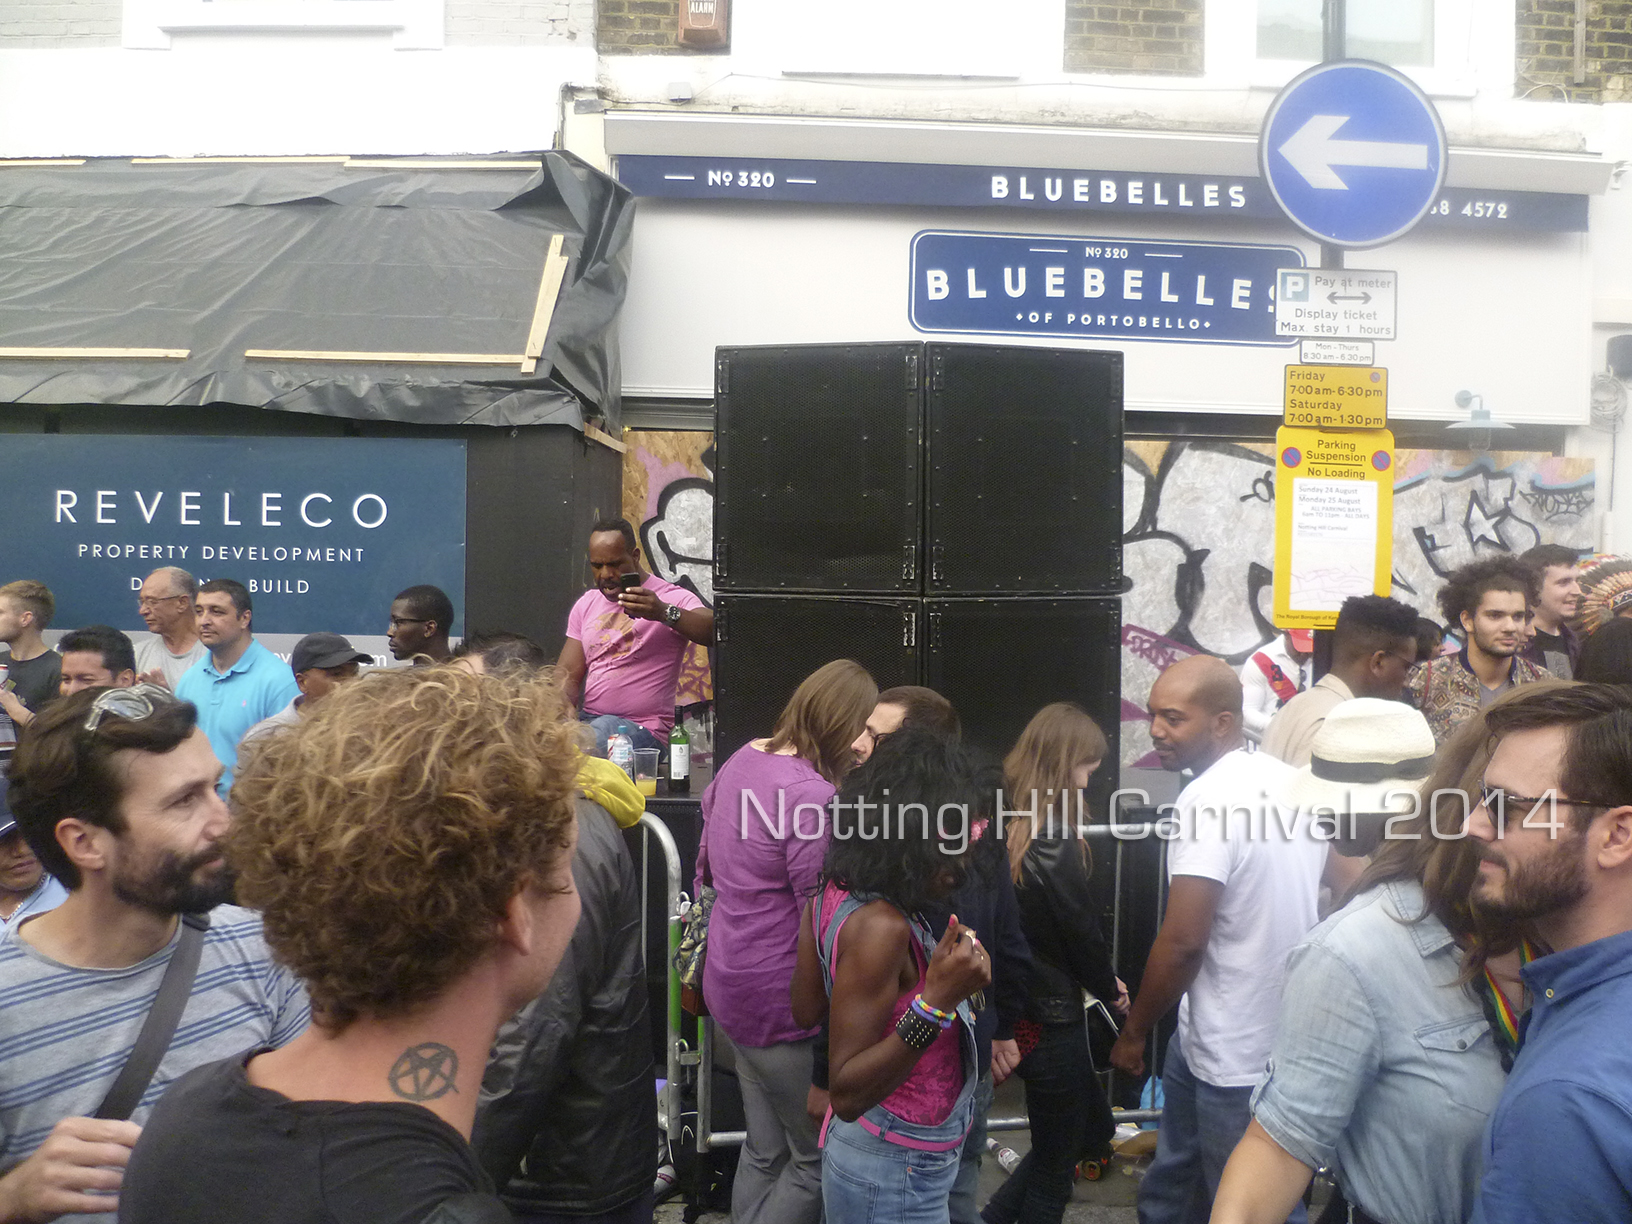 Notting-Hill-Carnival-2014-Street-Sound-System-29